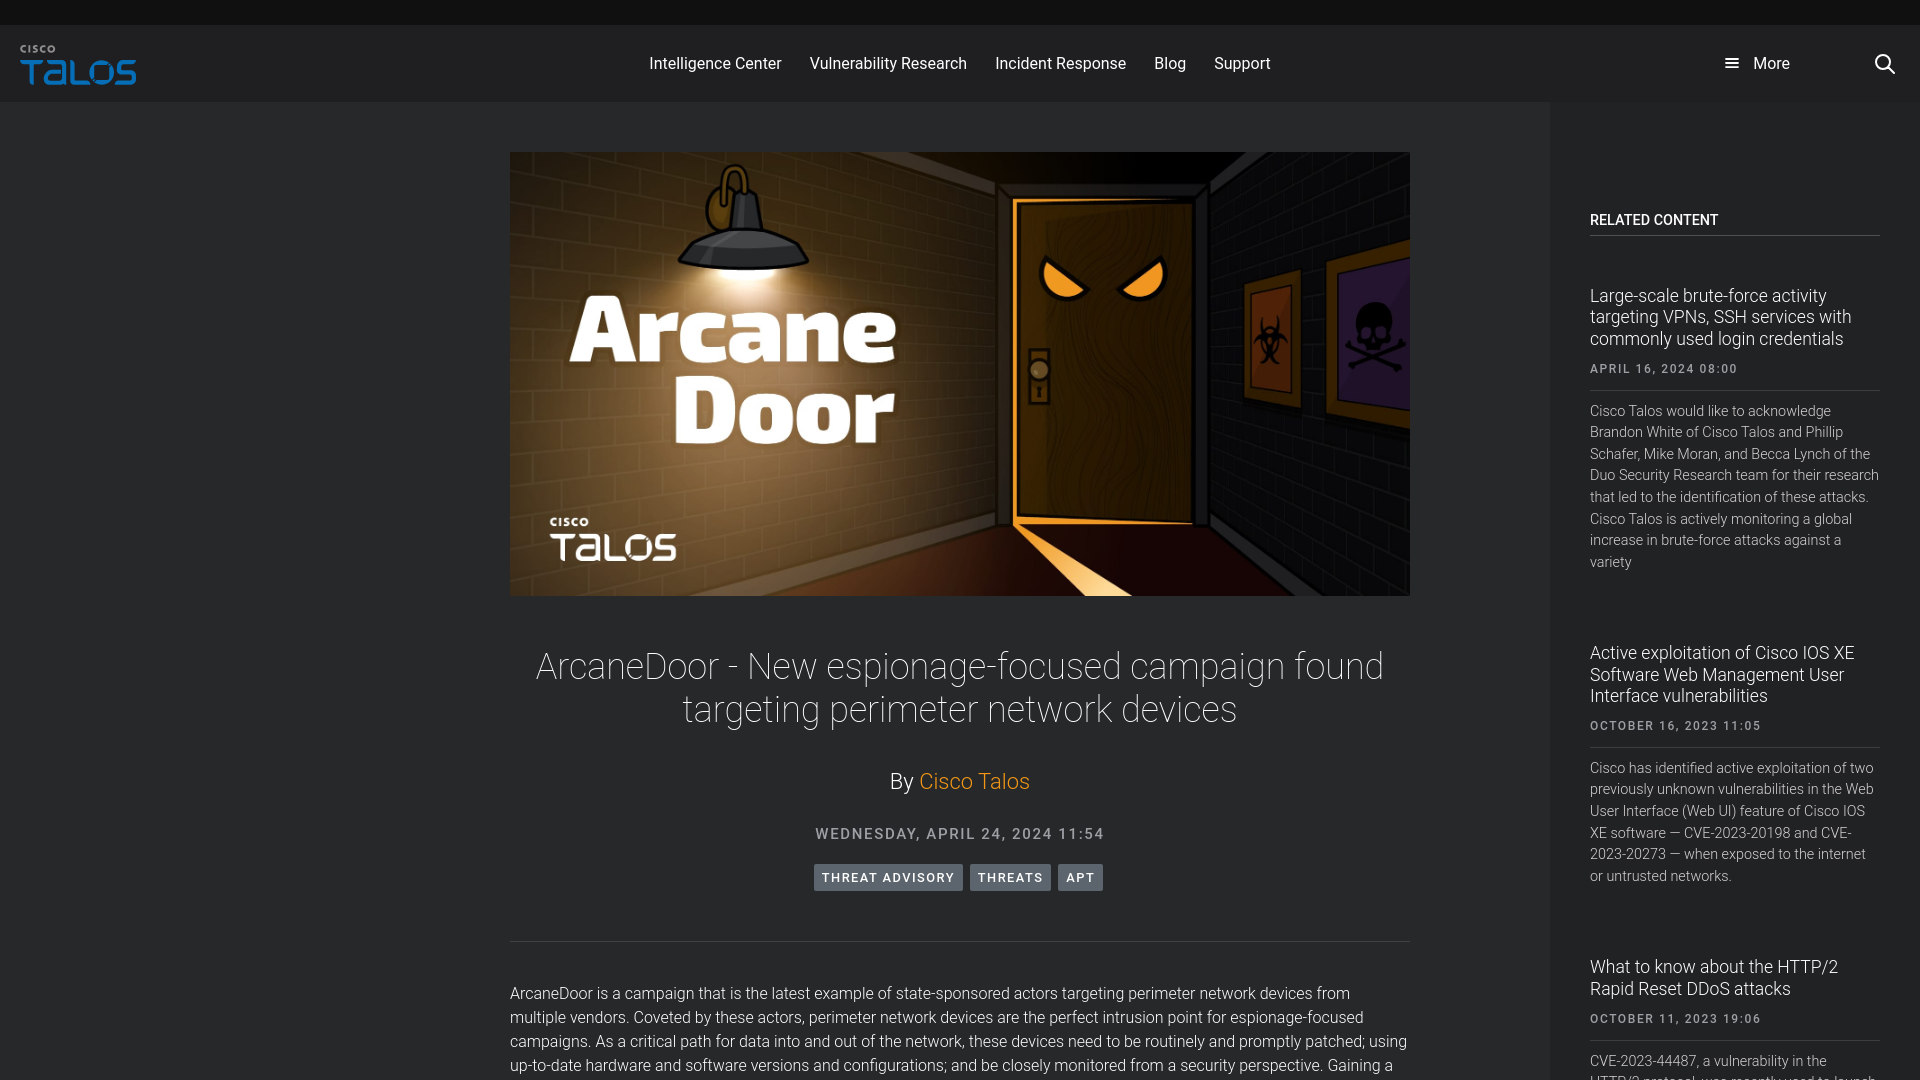 ArcaneDoor - New espionage-focused campaign found targeting perimeter network devices